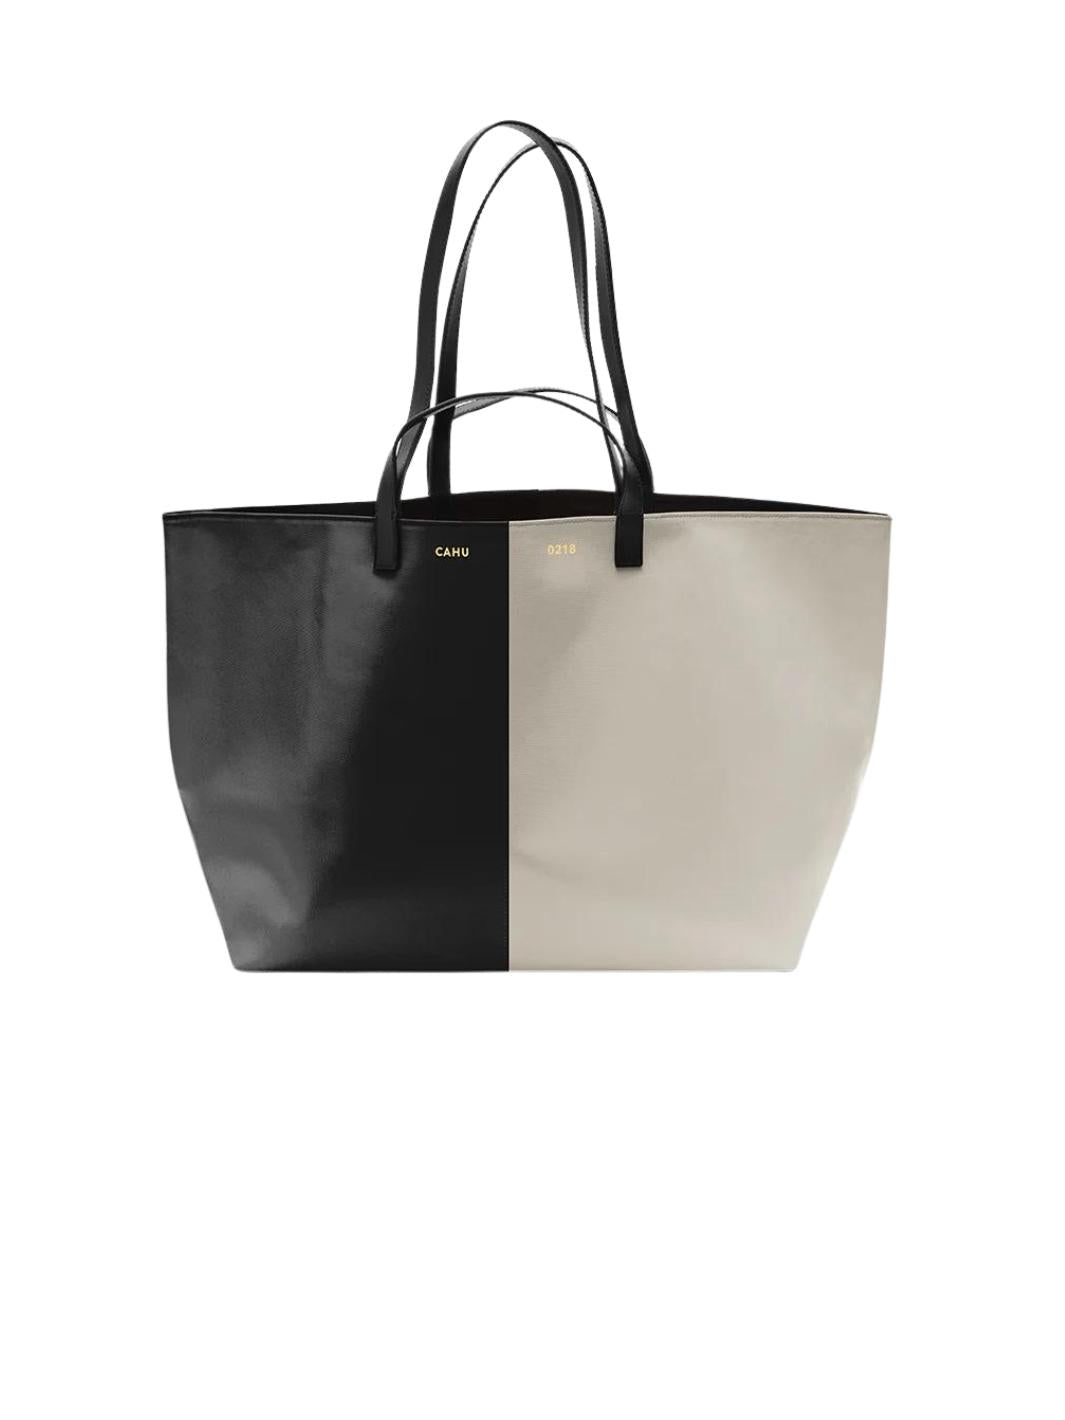 Cahu Bags Tote Bag | Pratique Medium Military Grey/Black